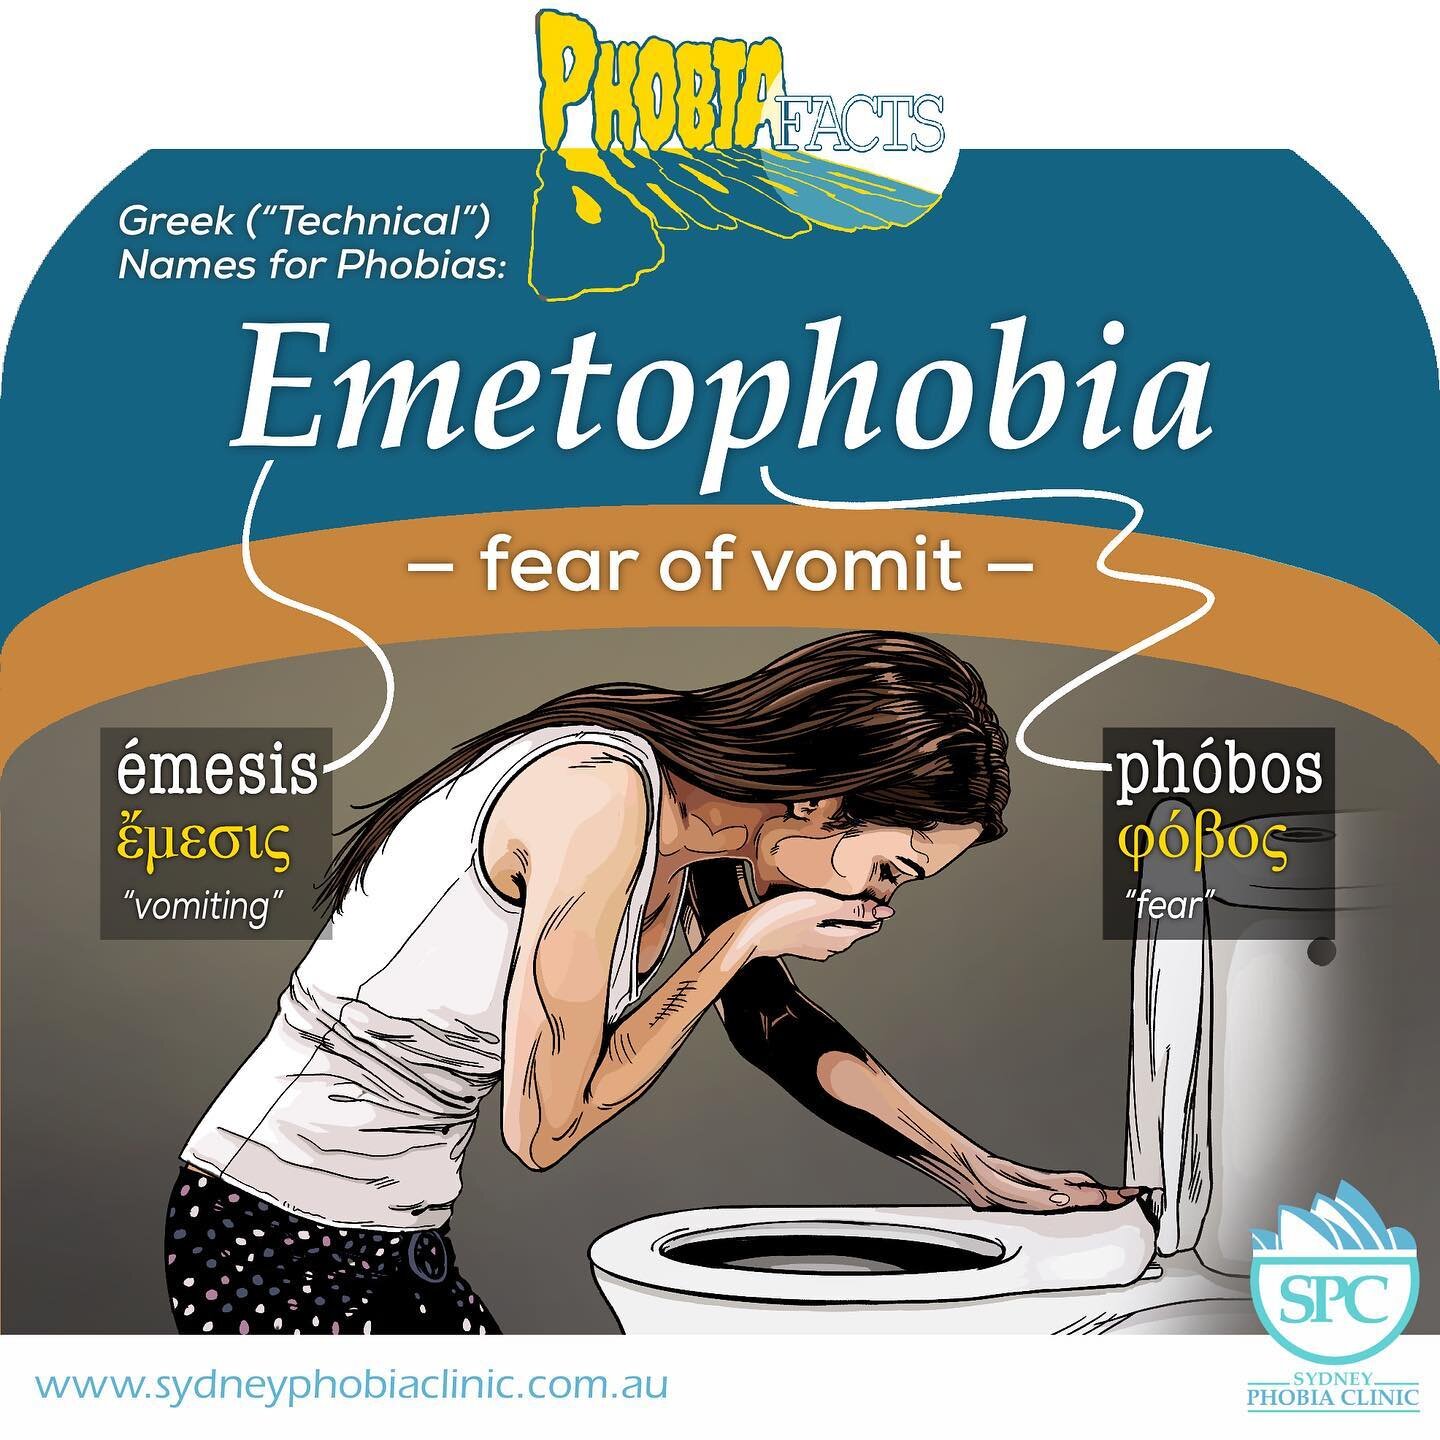 EMETOPHOBIA &mdash; fear of vomit or vomiting